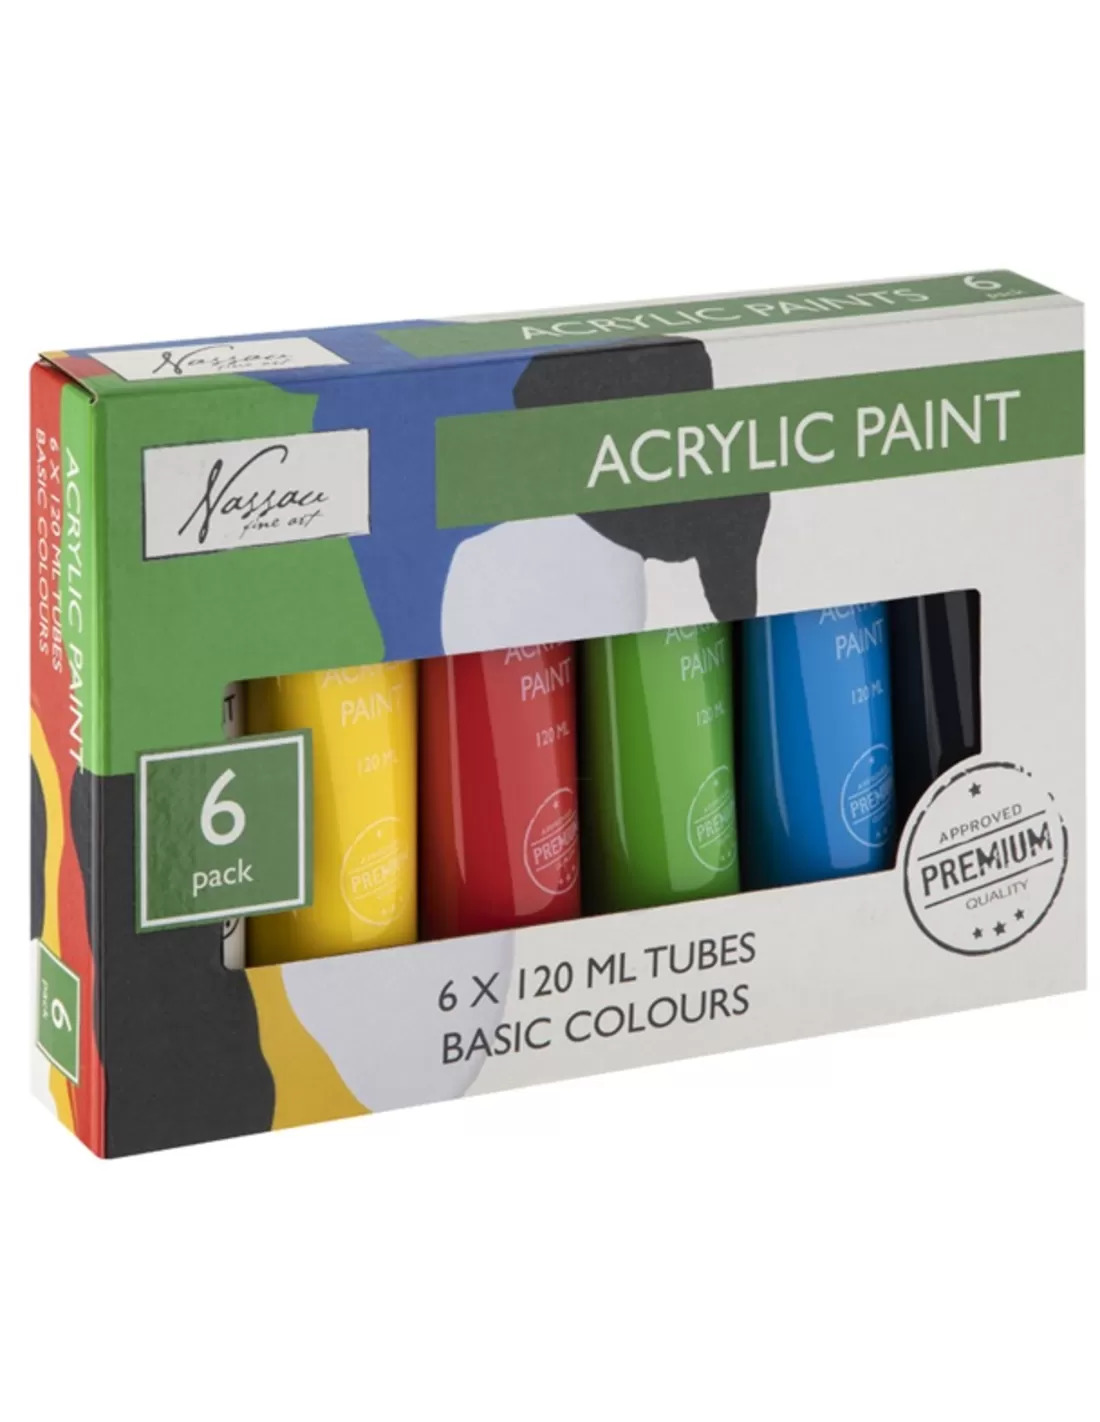 NASSAU Acrylfarben-Set Basic 6 x 120 ml mehrere Farben